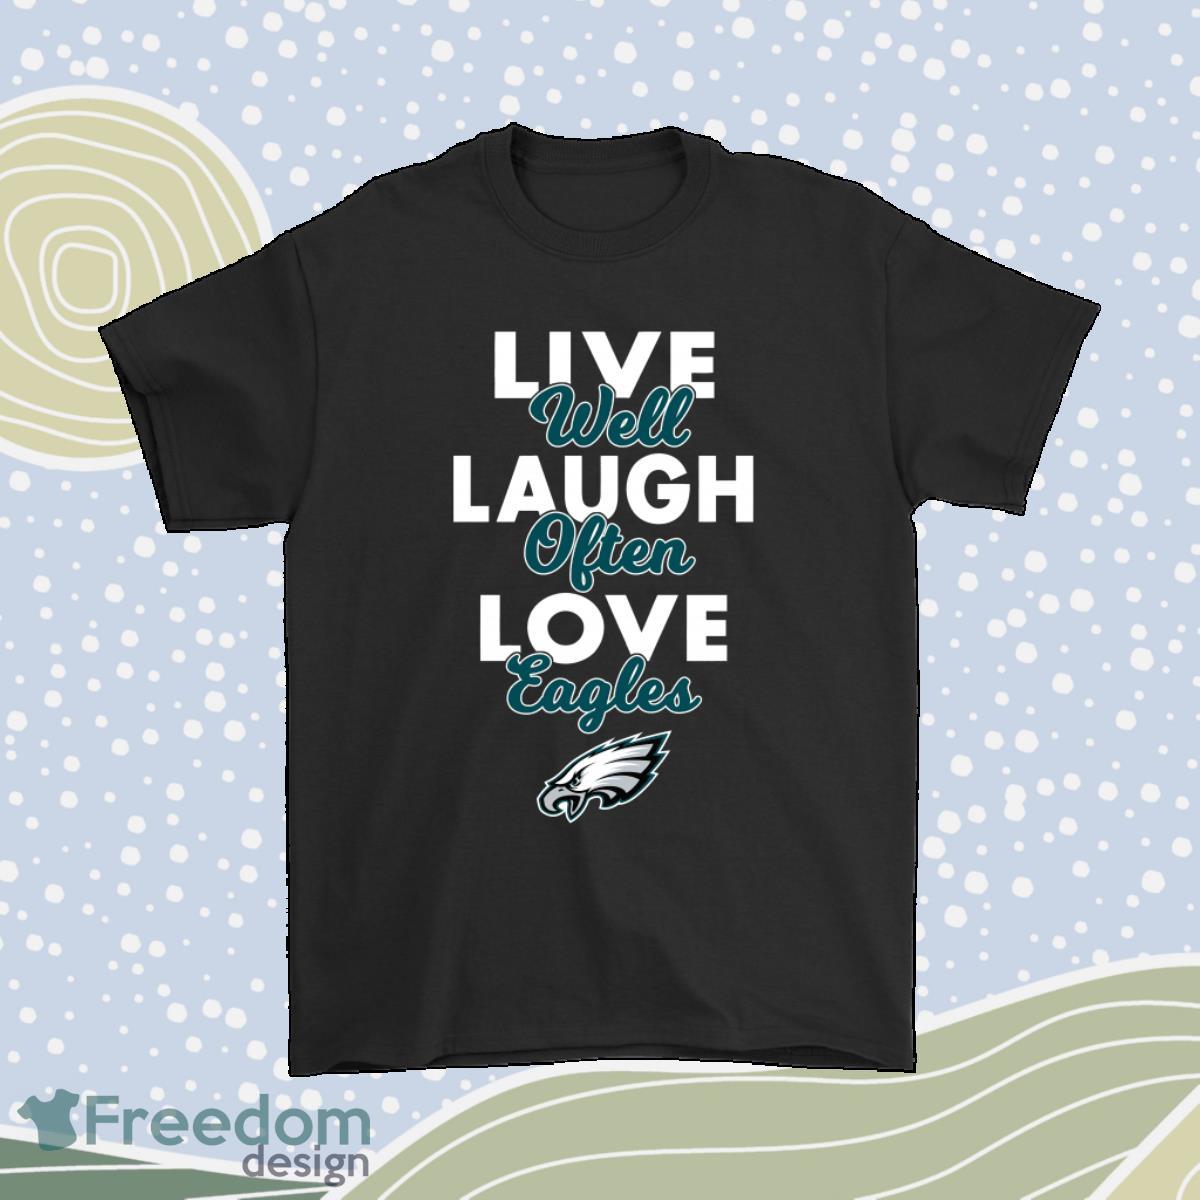 Live Well Laugh Often Love The Philadelphia Eagles Nfl Shirt Product Photo 1